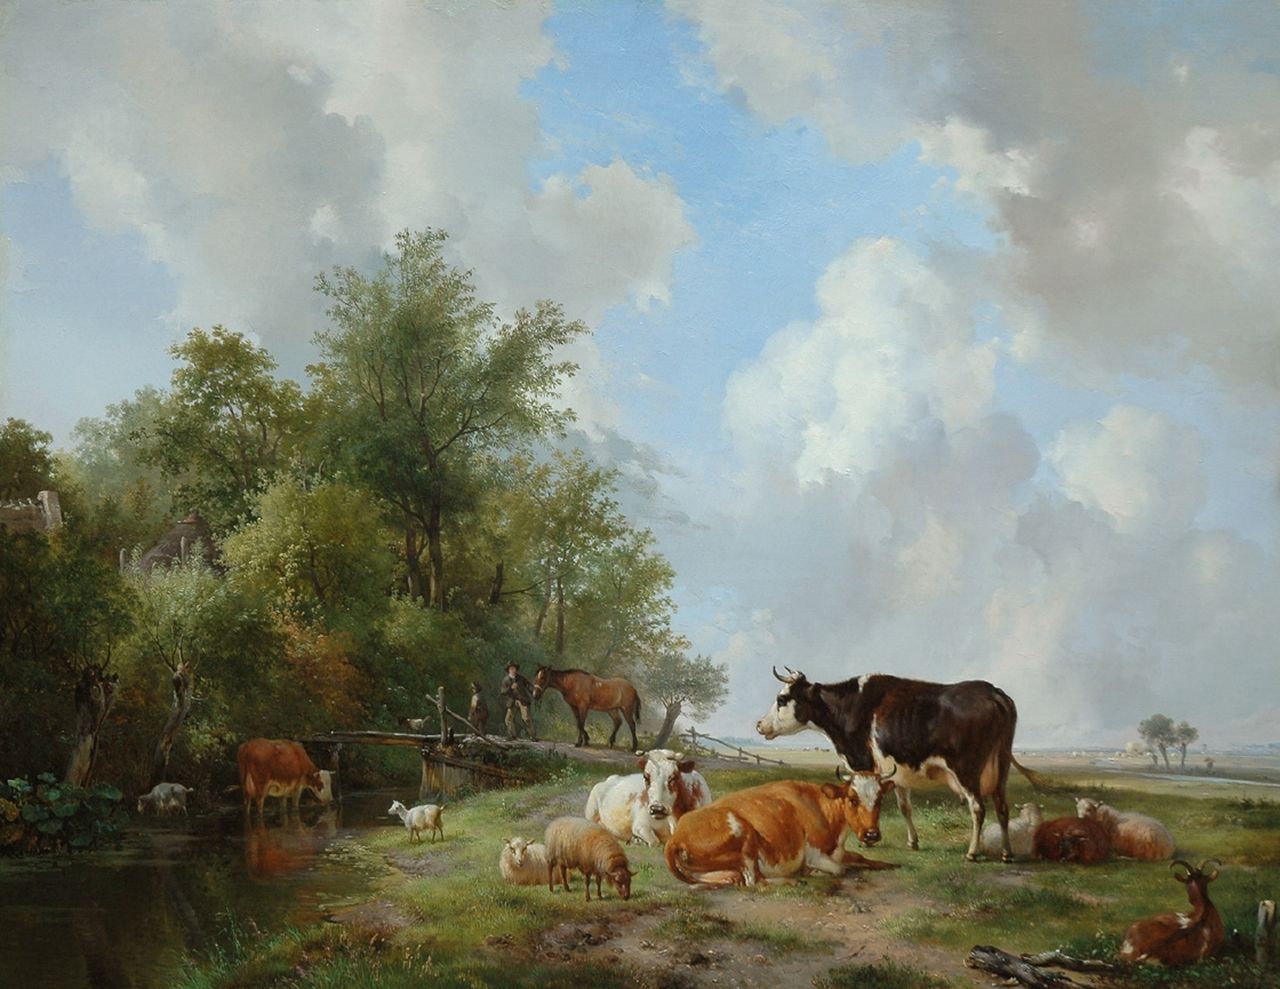 Sande Bakhuyzen H. van de | Hendrikus van de Sande Bakhuyzen, Cattle on the edge of a forest in an extensive sunlit landscape, oil on panel 59.9 x 77.8 cm, signed l.r. and dated 1838